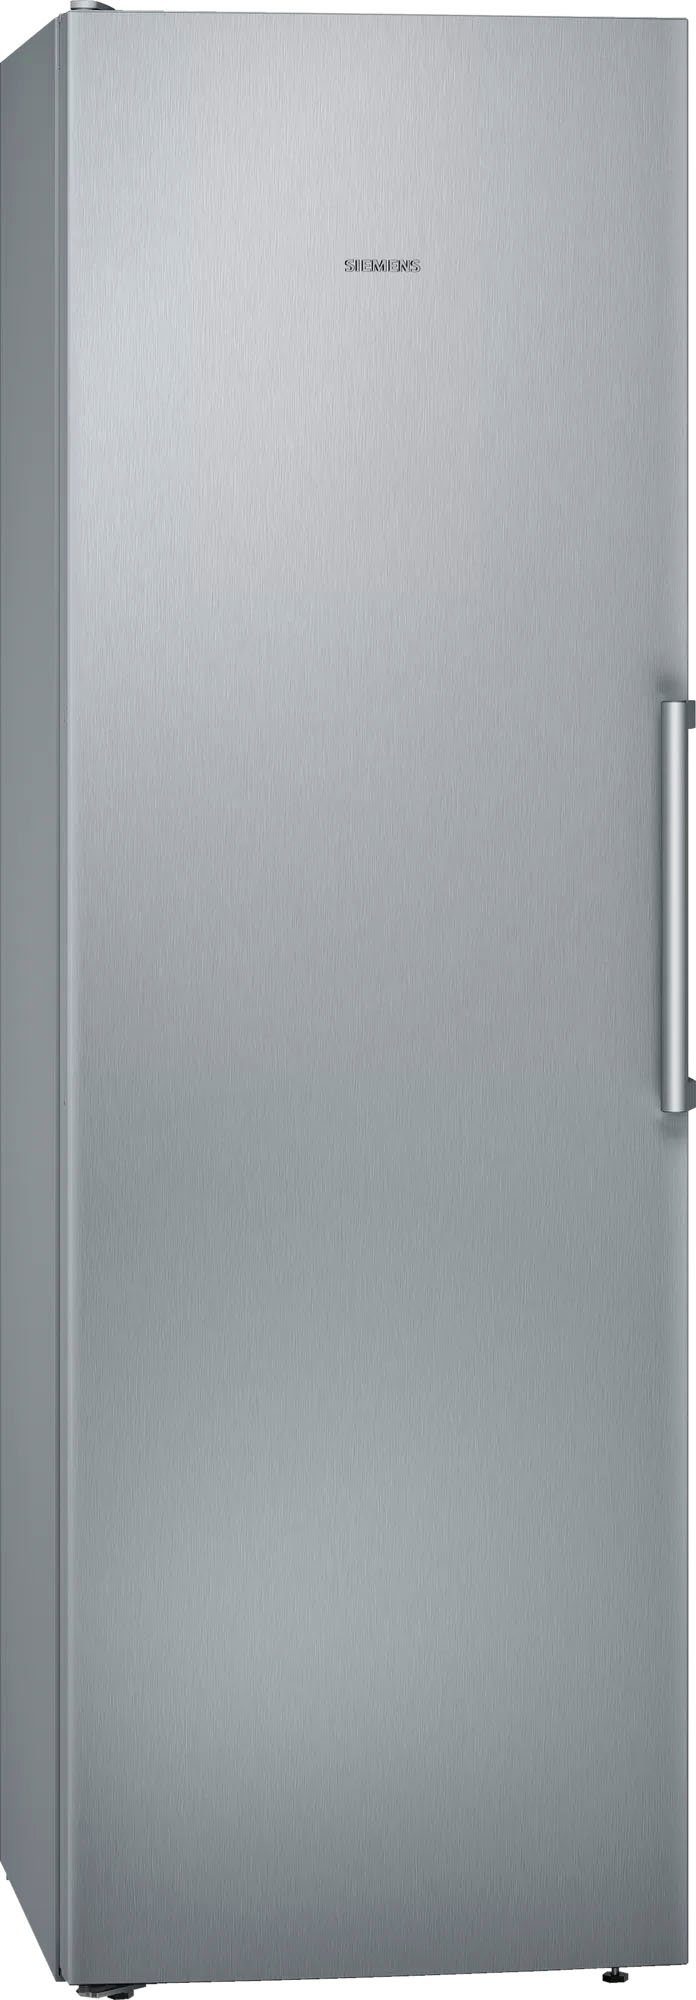 SIEMENS Kühlschrank iQ300 KS36VVIEP, 186 cm hoch, 60 cm breit Edelstahl mit Anti-Fingerprint